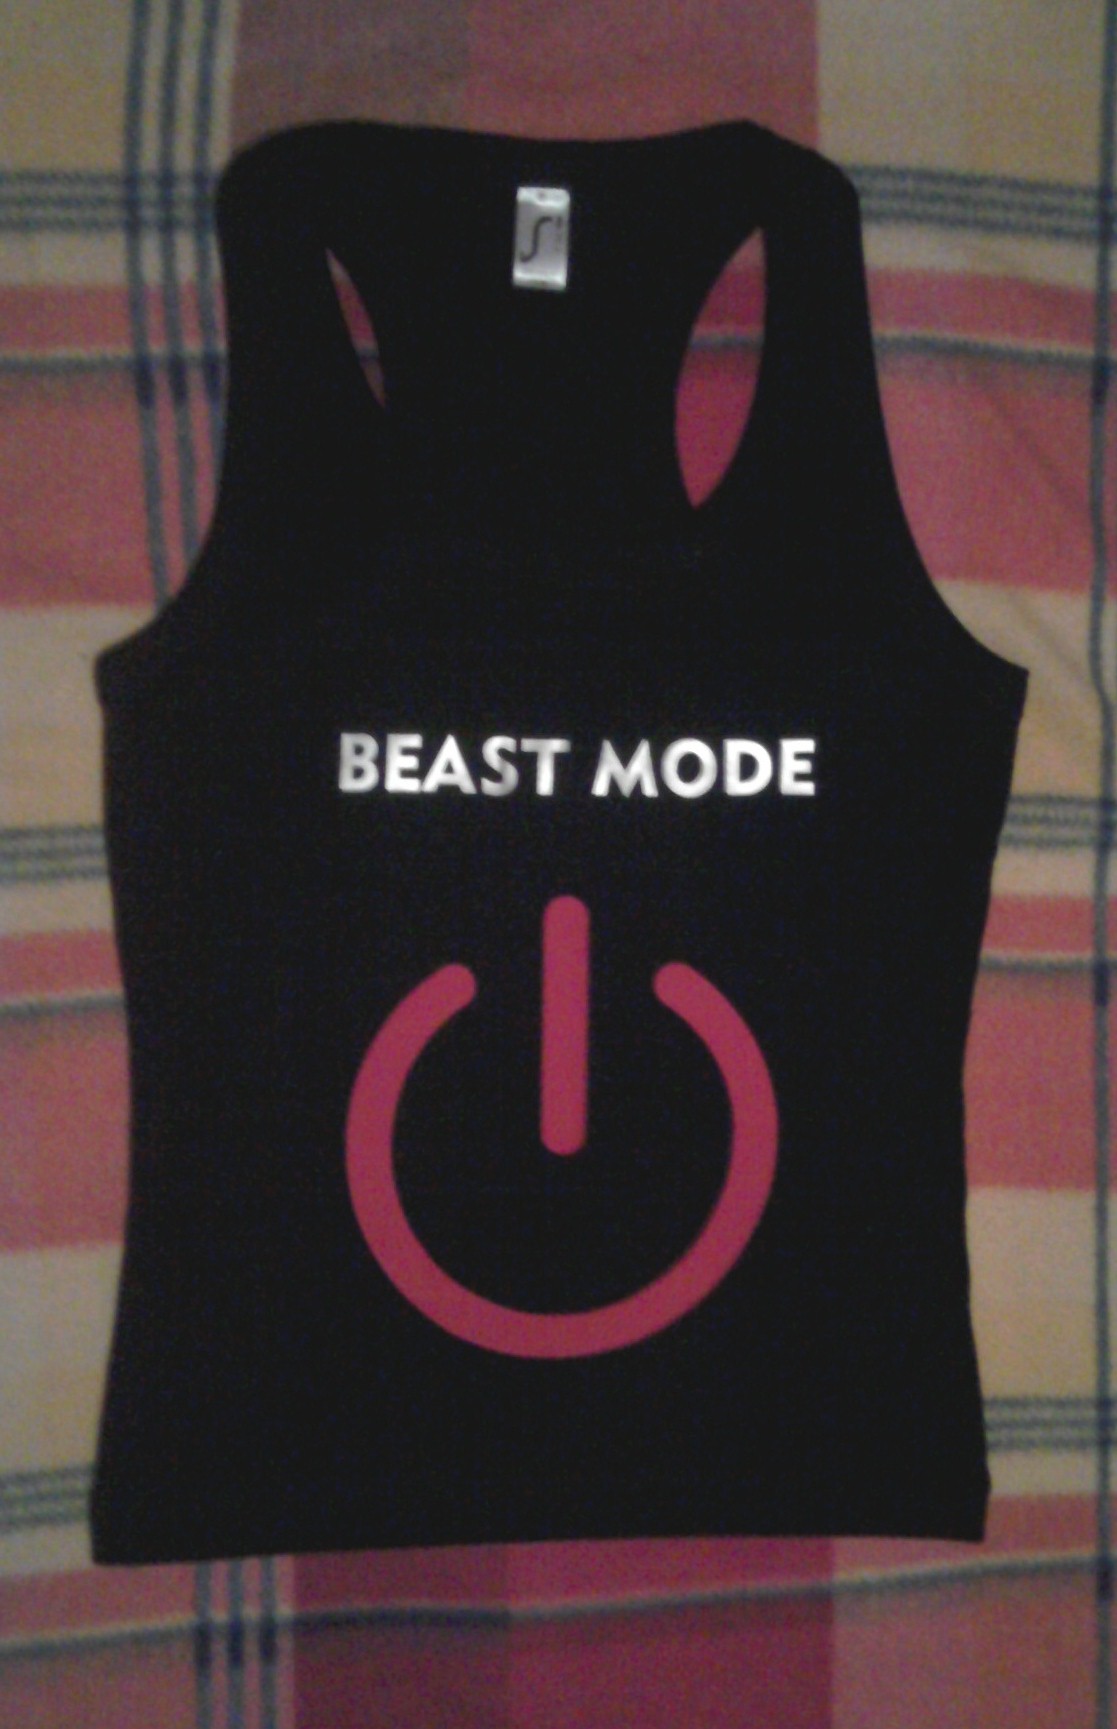 beast mode on.jpg